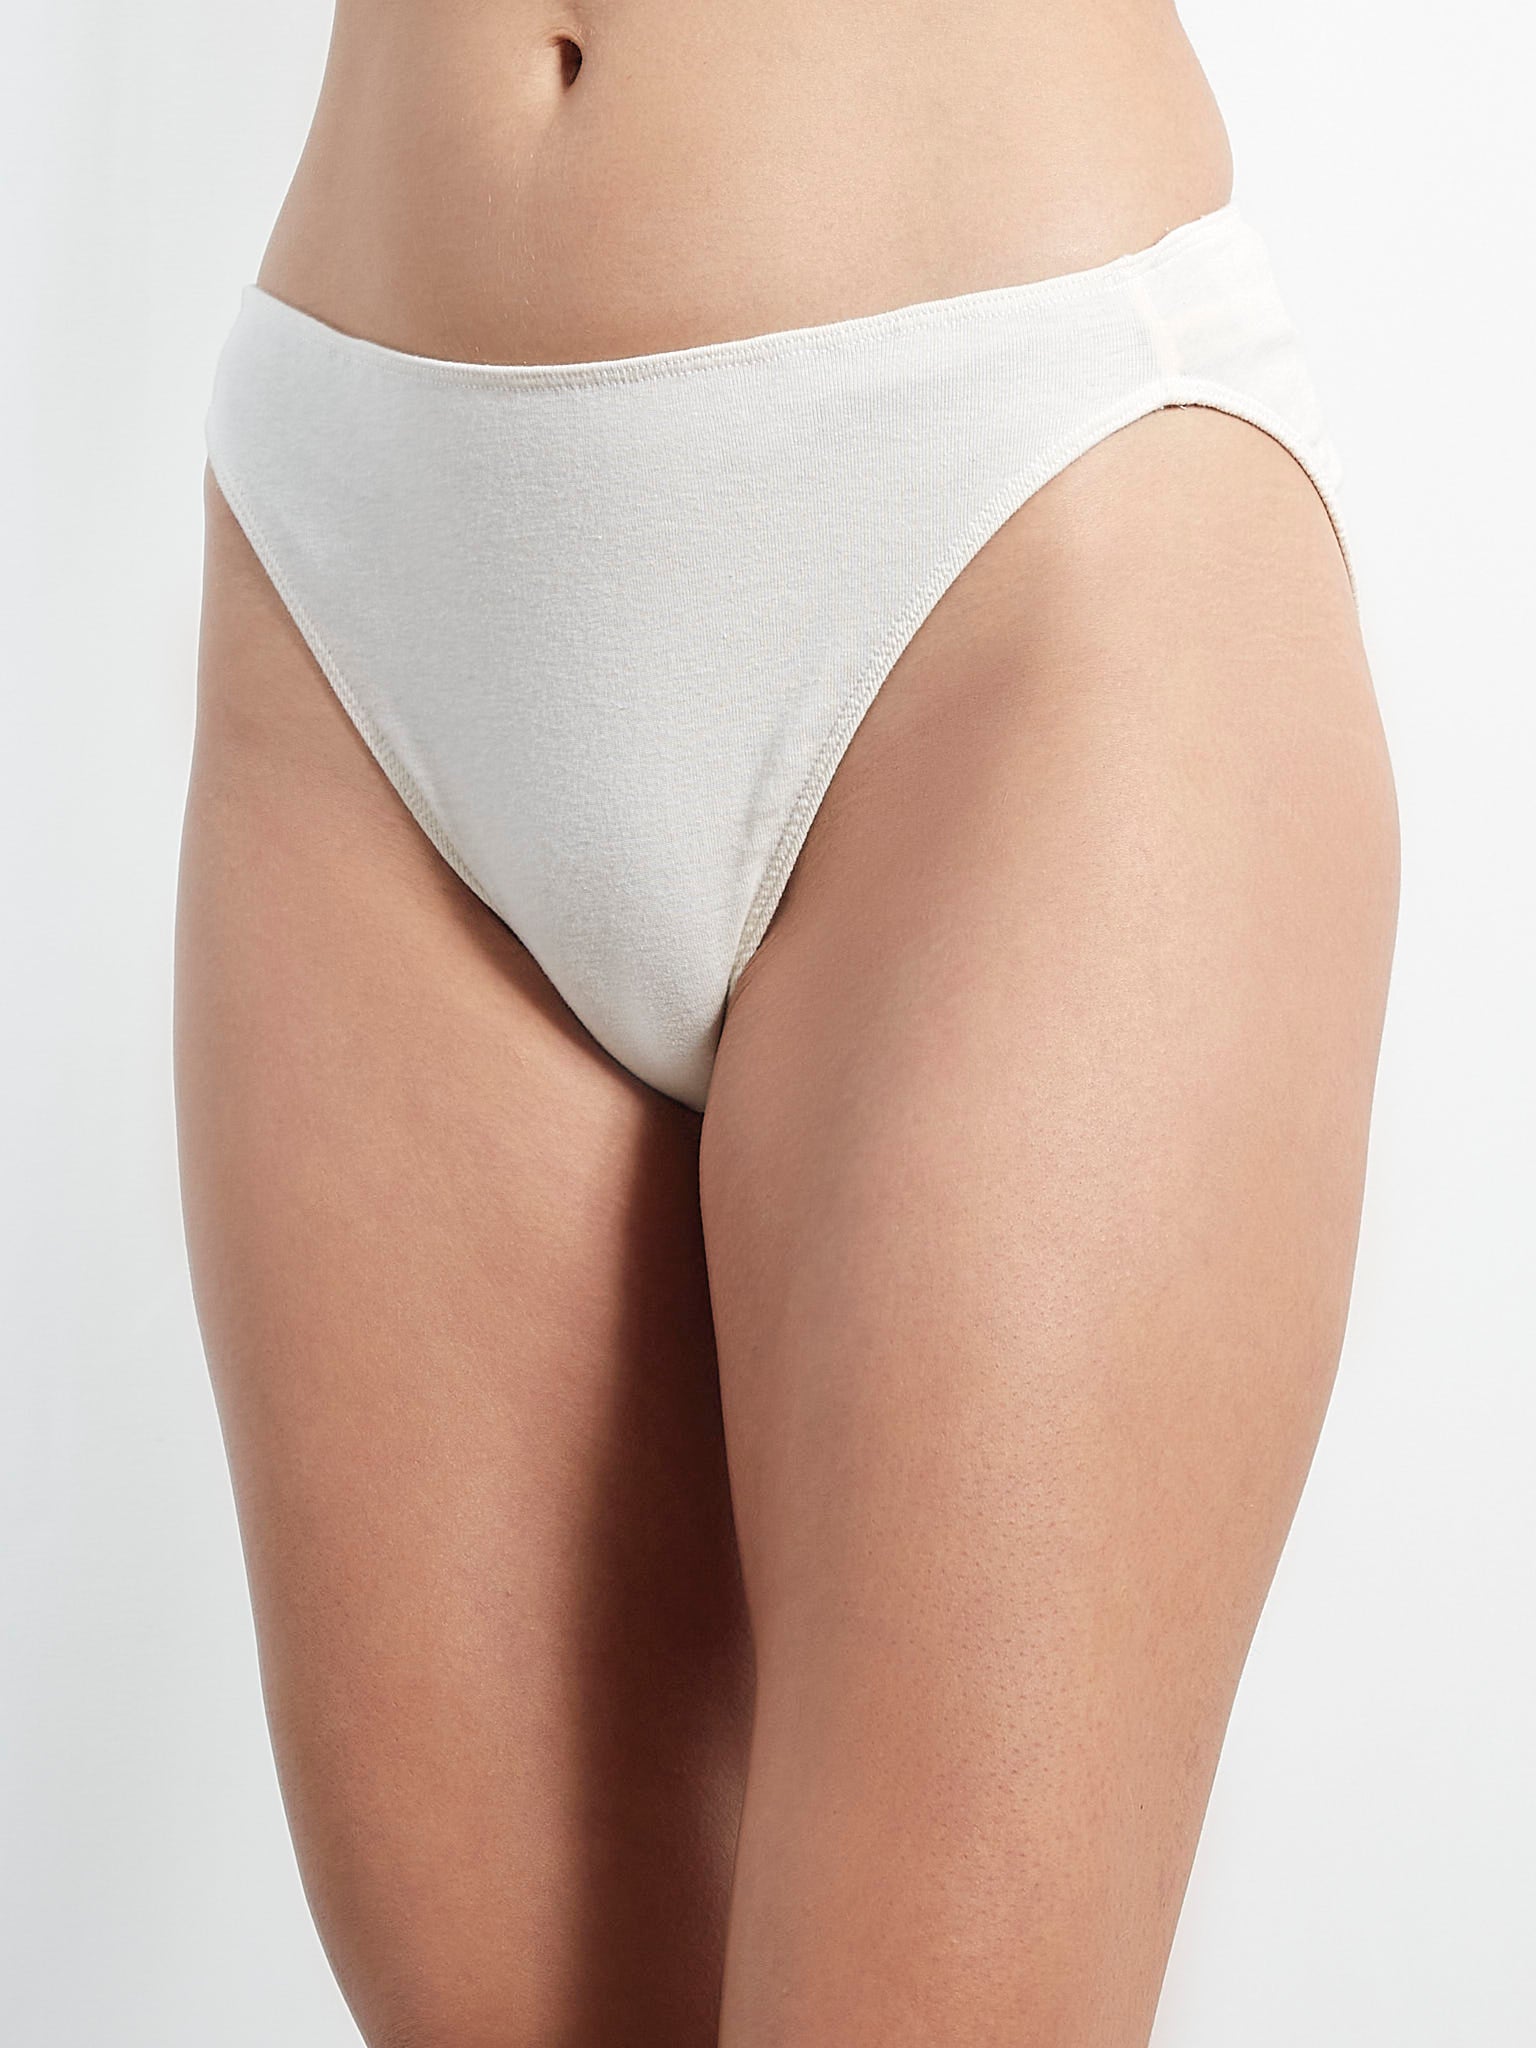 Womens Ladies Good Quality 100% Cotton Full Briefs Underwear Pant